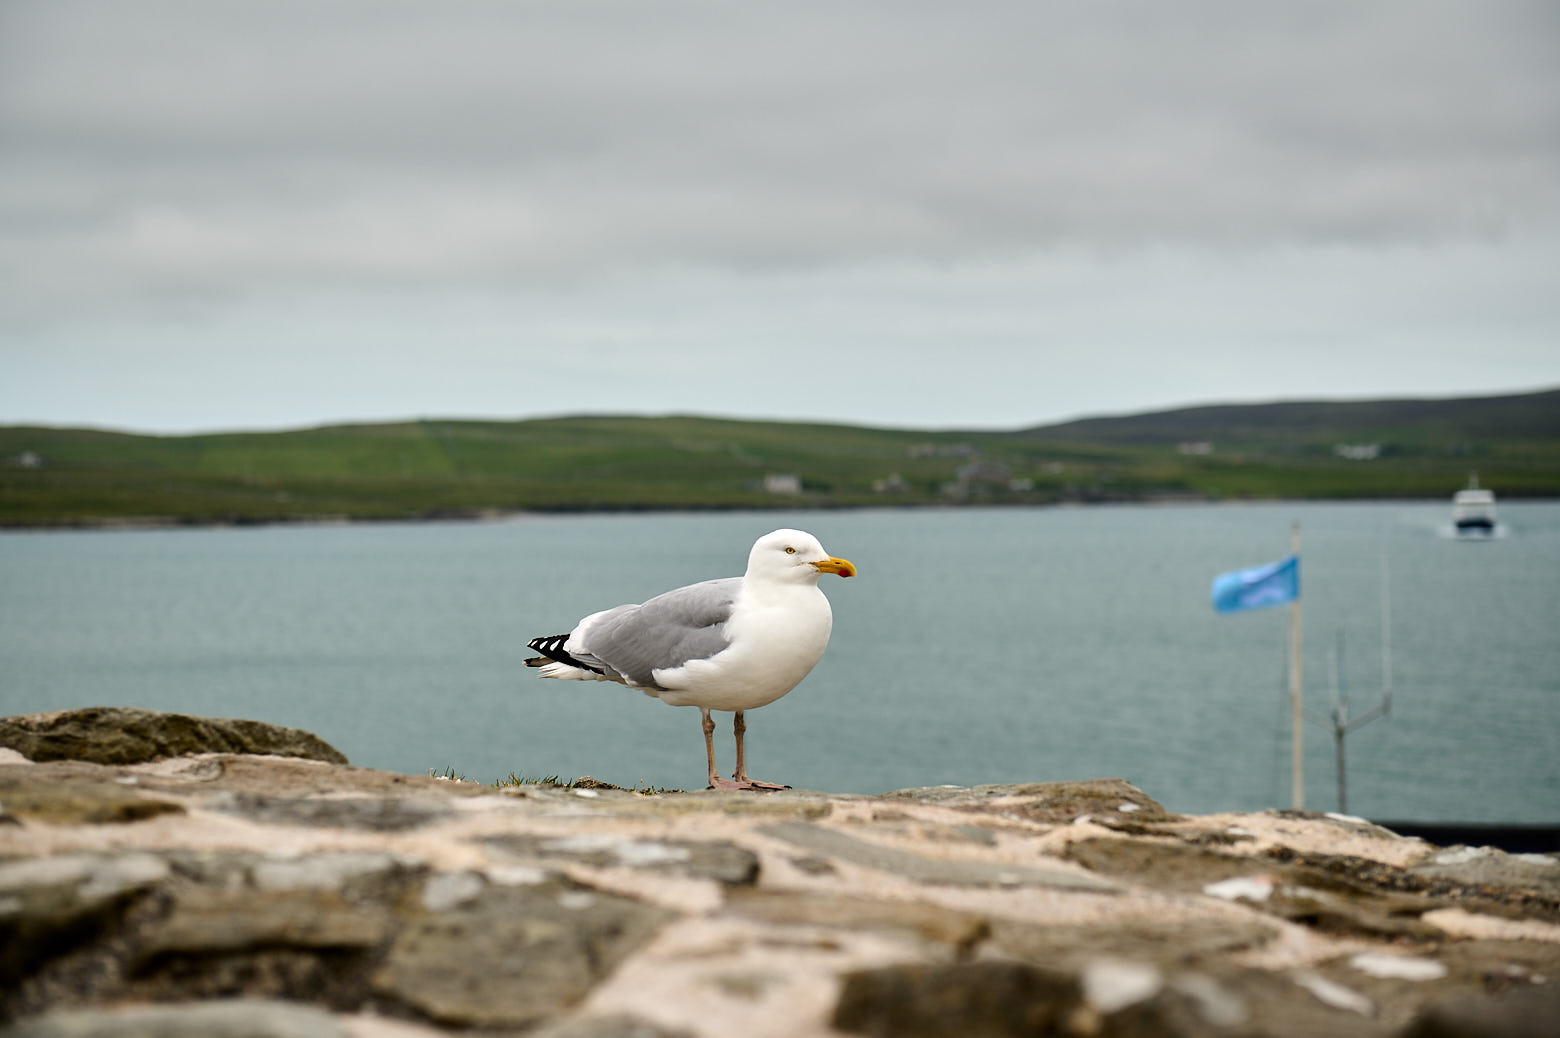 A walk on Saturday morning along the coastline of Lerwick in Shetland.